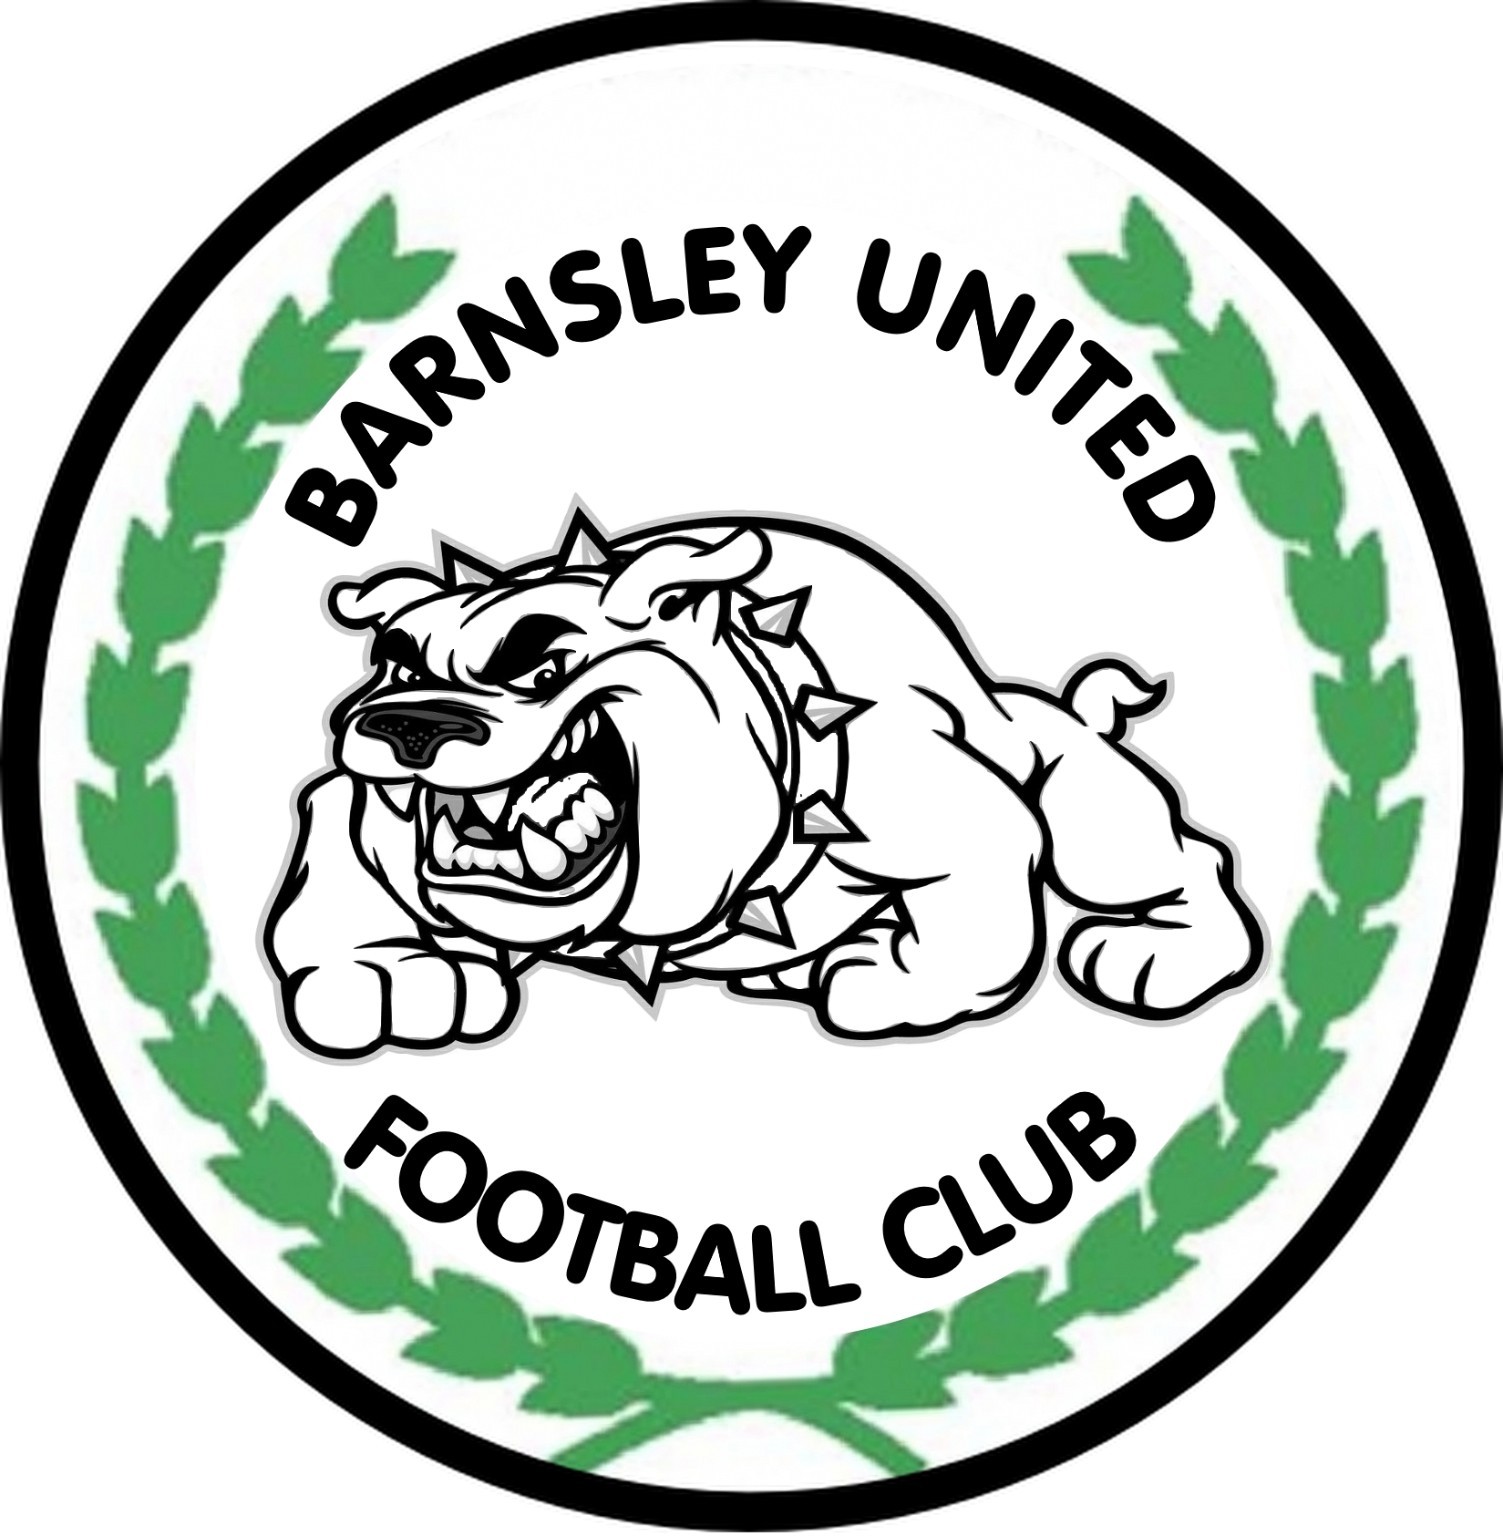 Barnsley Football Club Logo